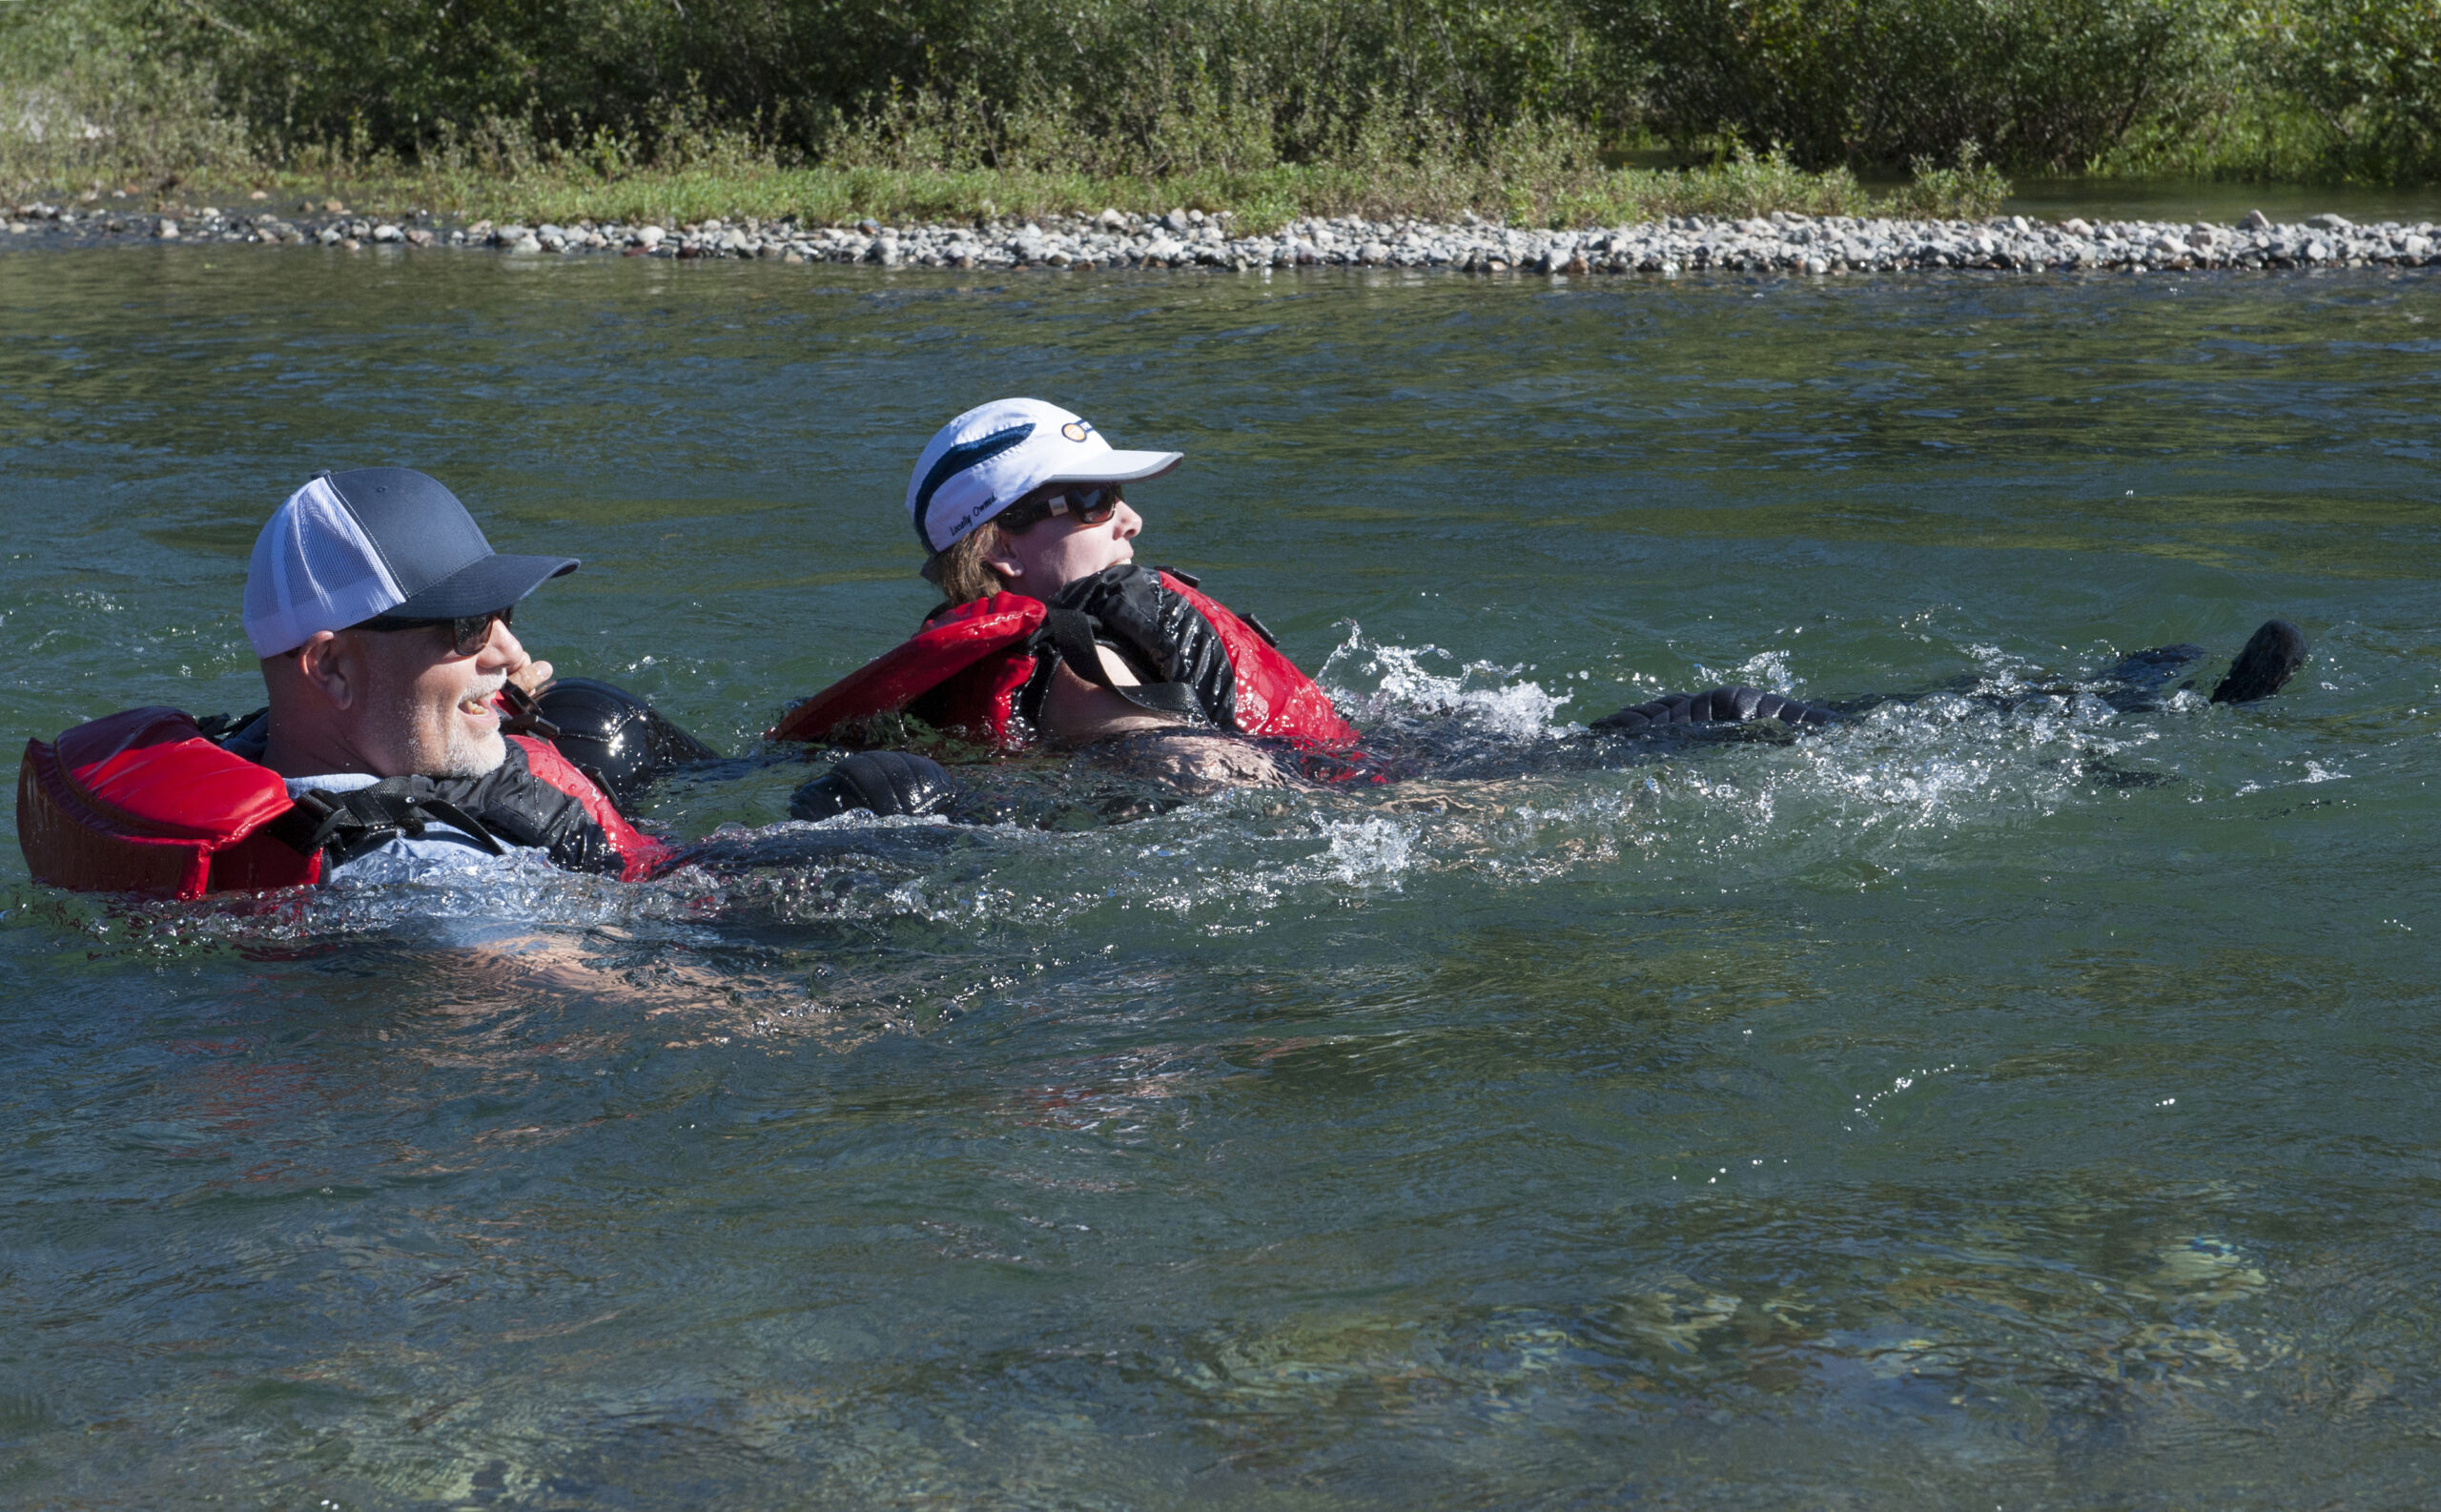 B.C. Green party members Adam Olsen and Sonia Furstenau cool off in the river.